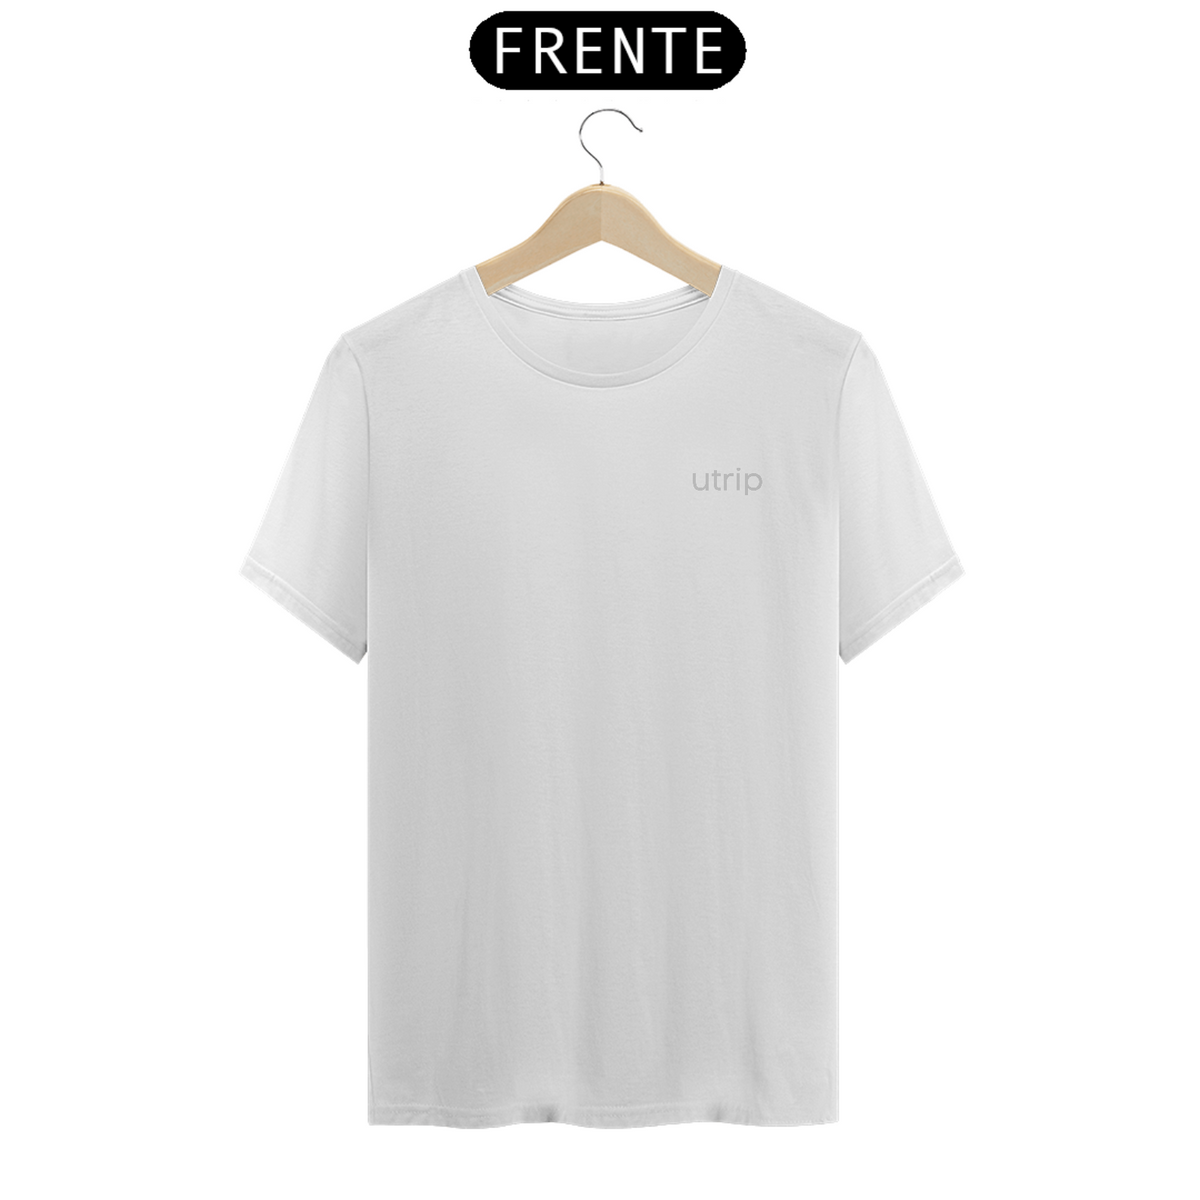 Nome do produto: Camiseta PIMA minimalista Utrip